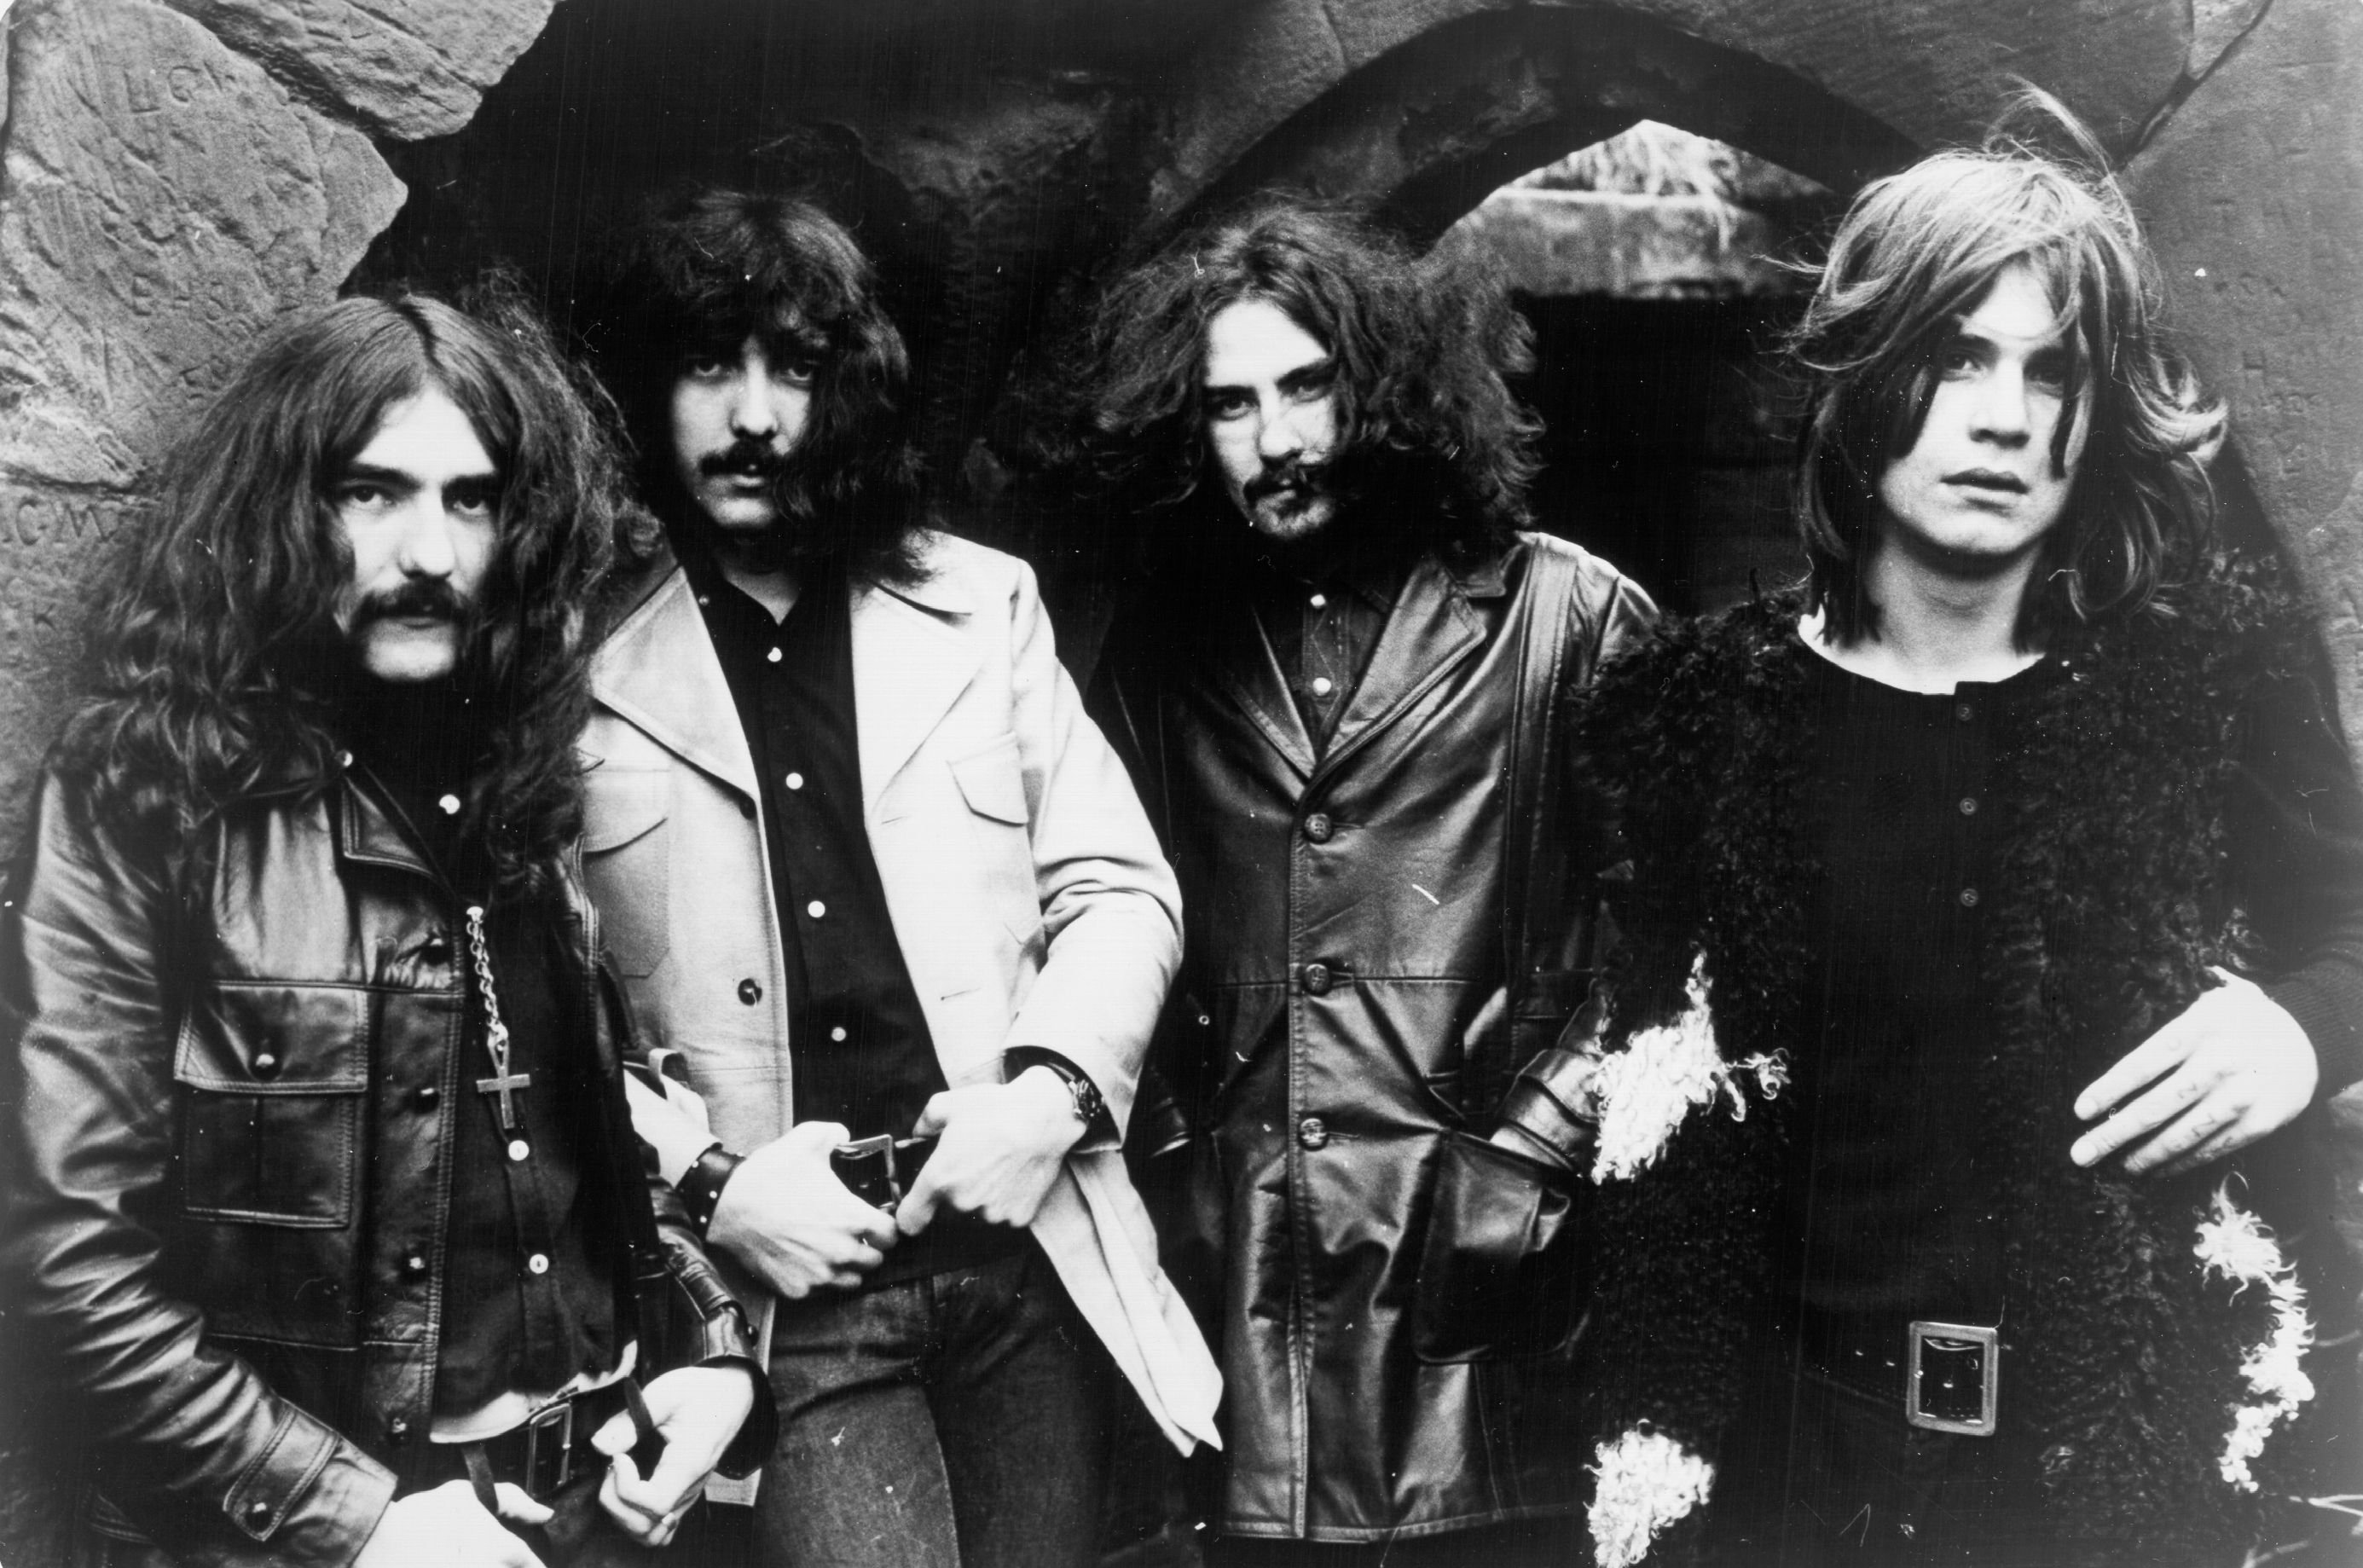  Black Sabbath - Geezer Butler, Tony Iommi, Bill Ward and Ozzy Osbourne, circa 1970 | Source: Getty Images